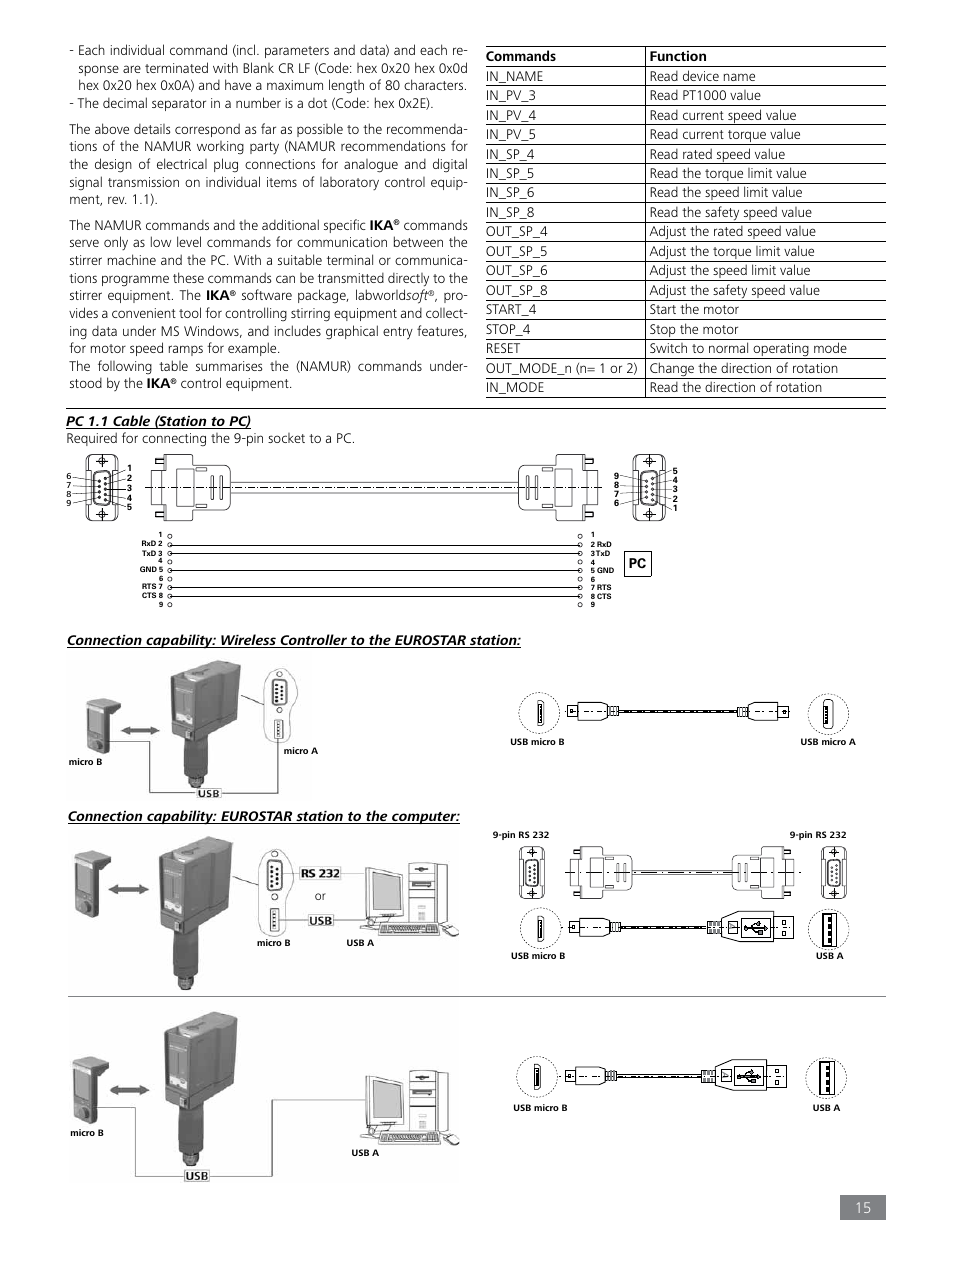 IKA EUROSTAR 20 high speed control User Manual | Page 15 / 19